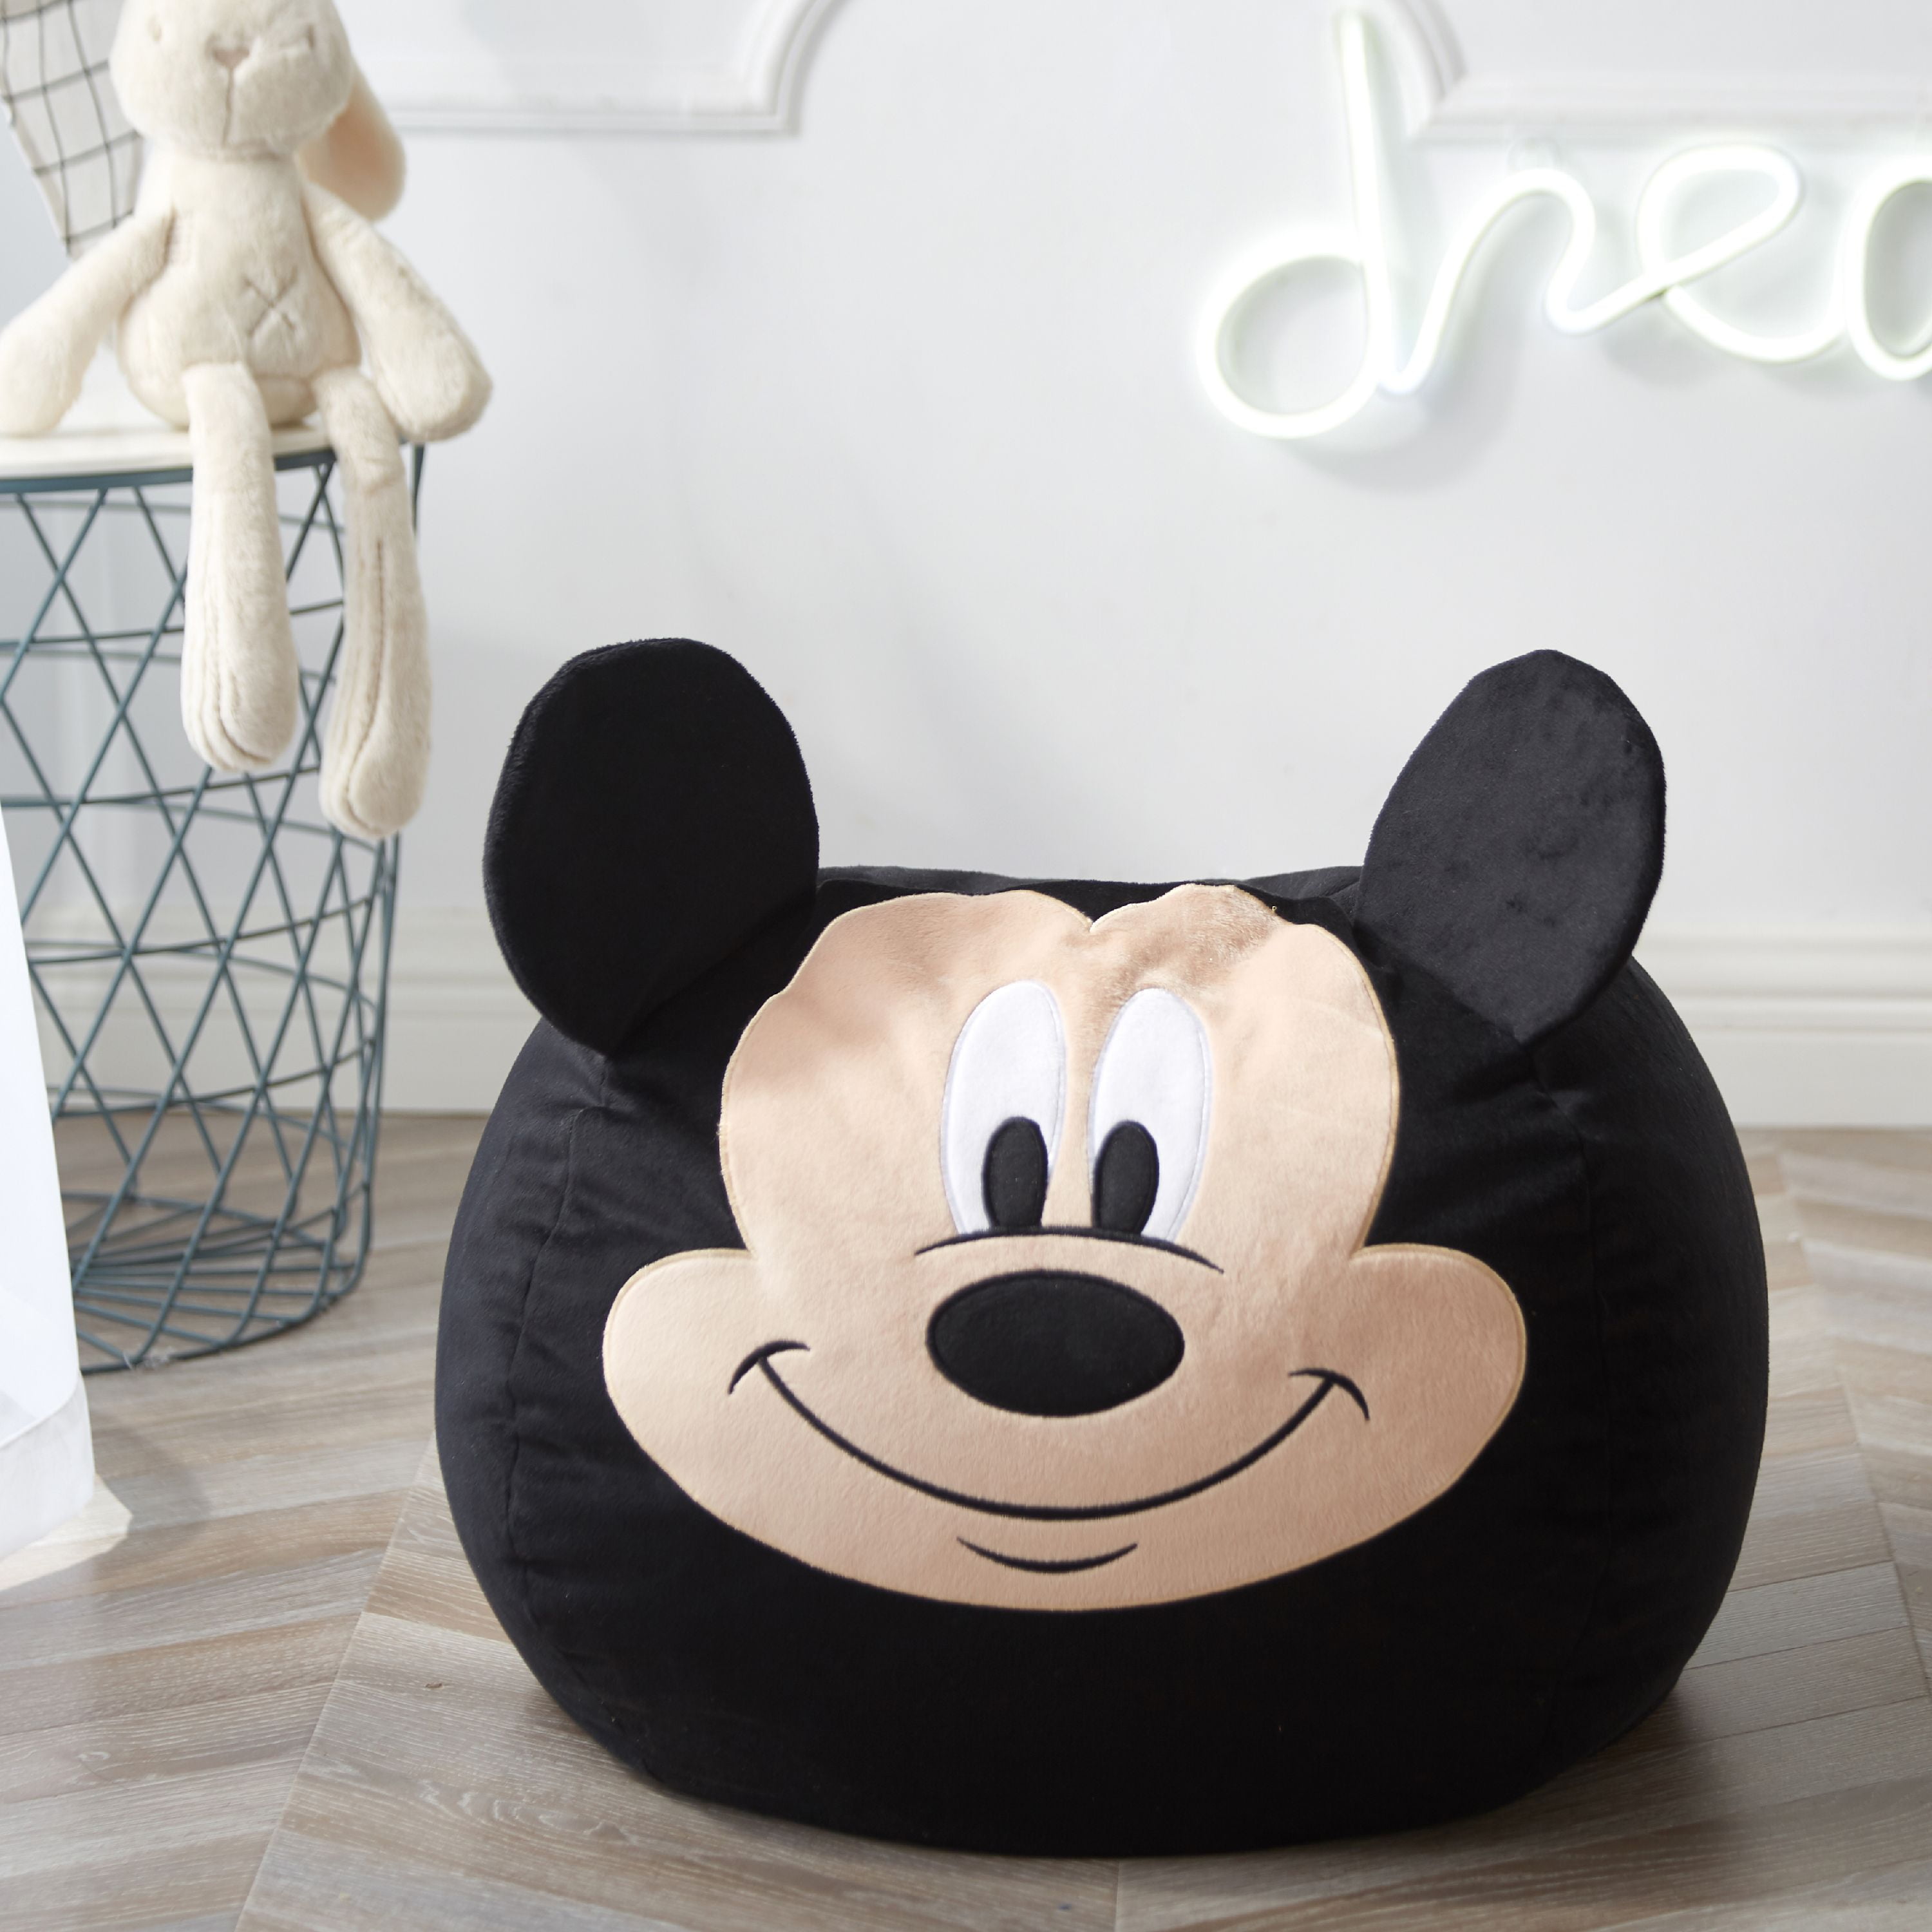 Disney Mickey Mouse Figural Bean Bag Chair Walmartcom Walmartcom